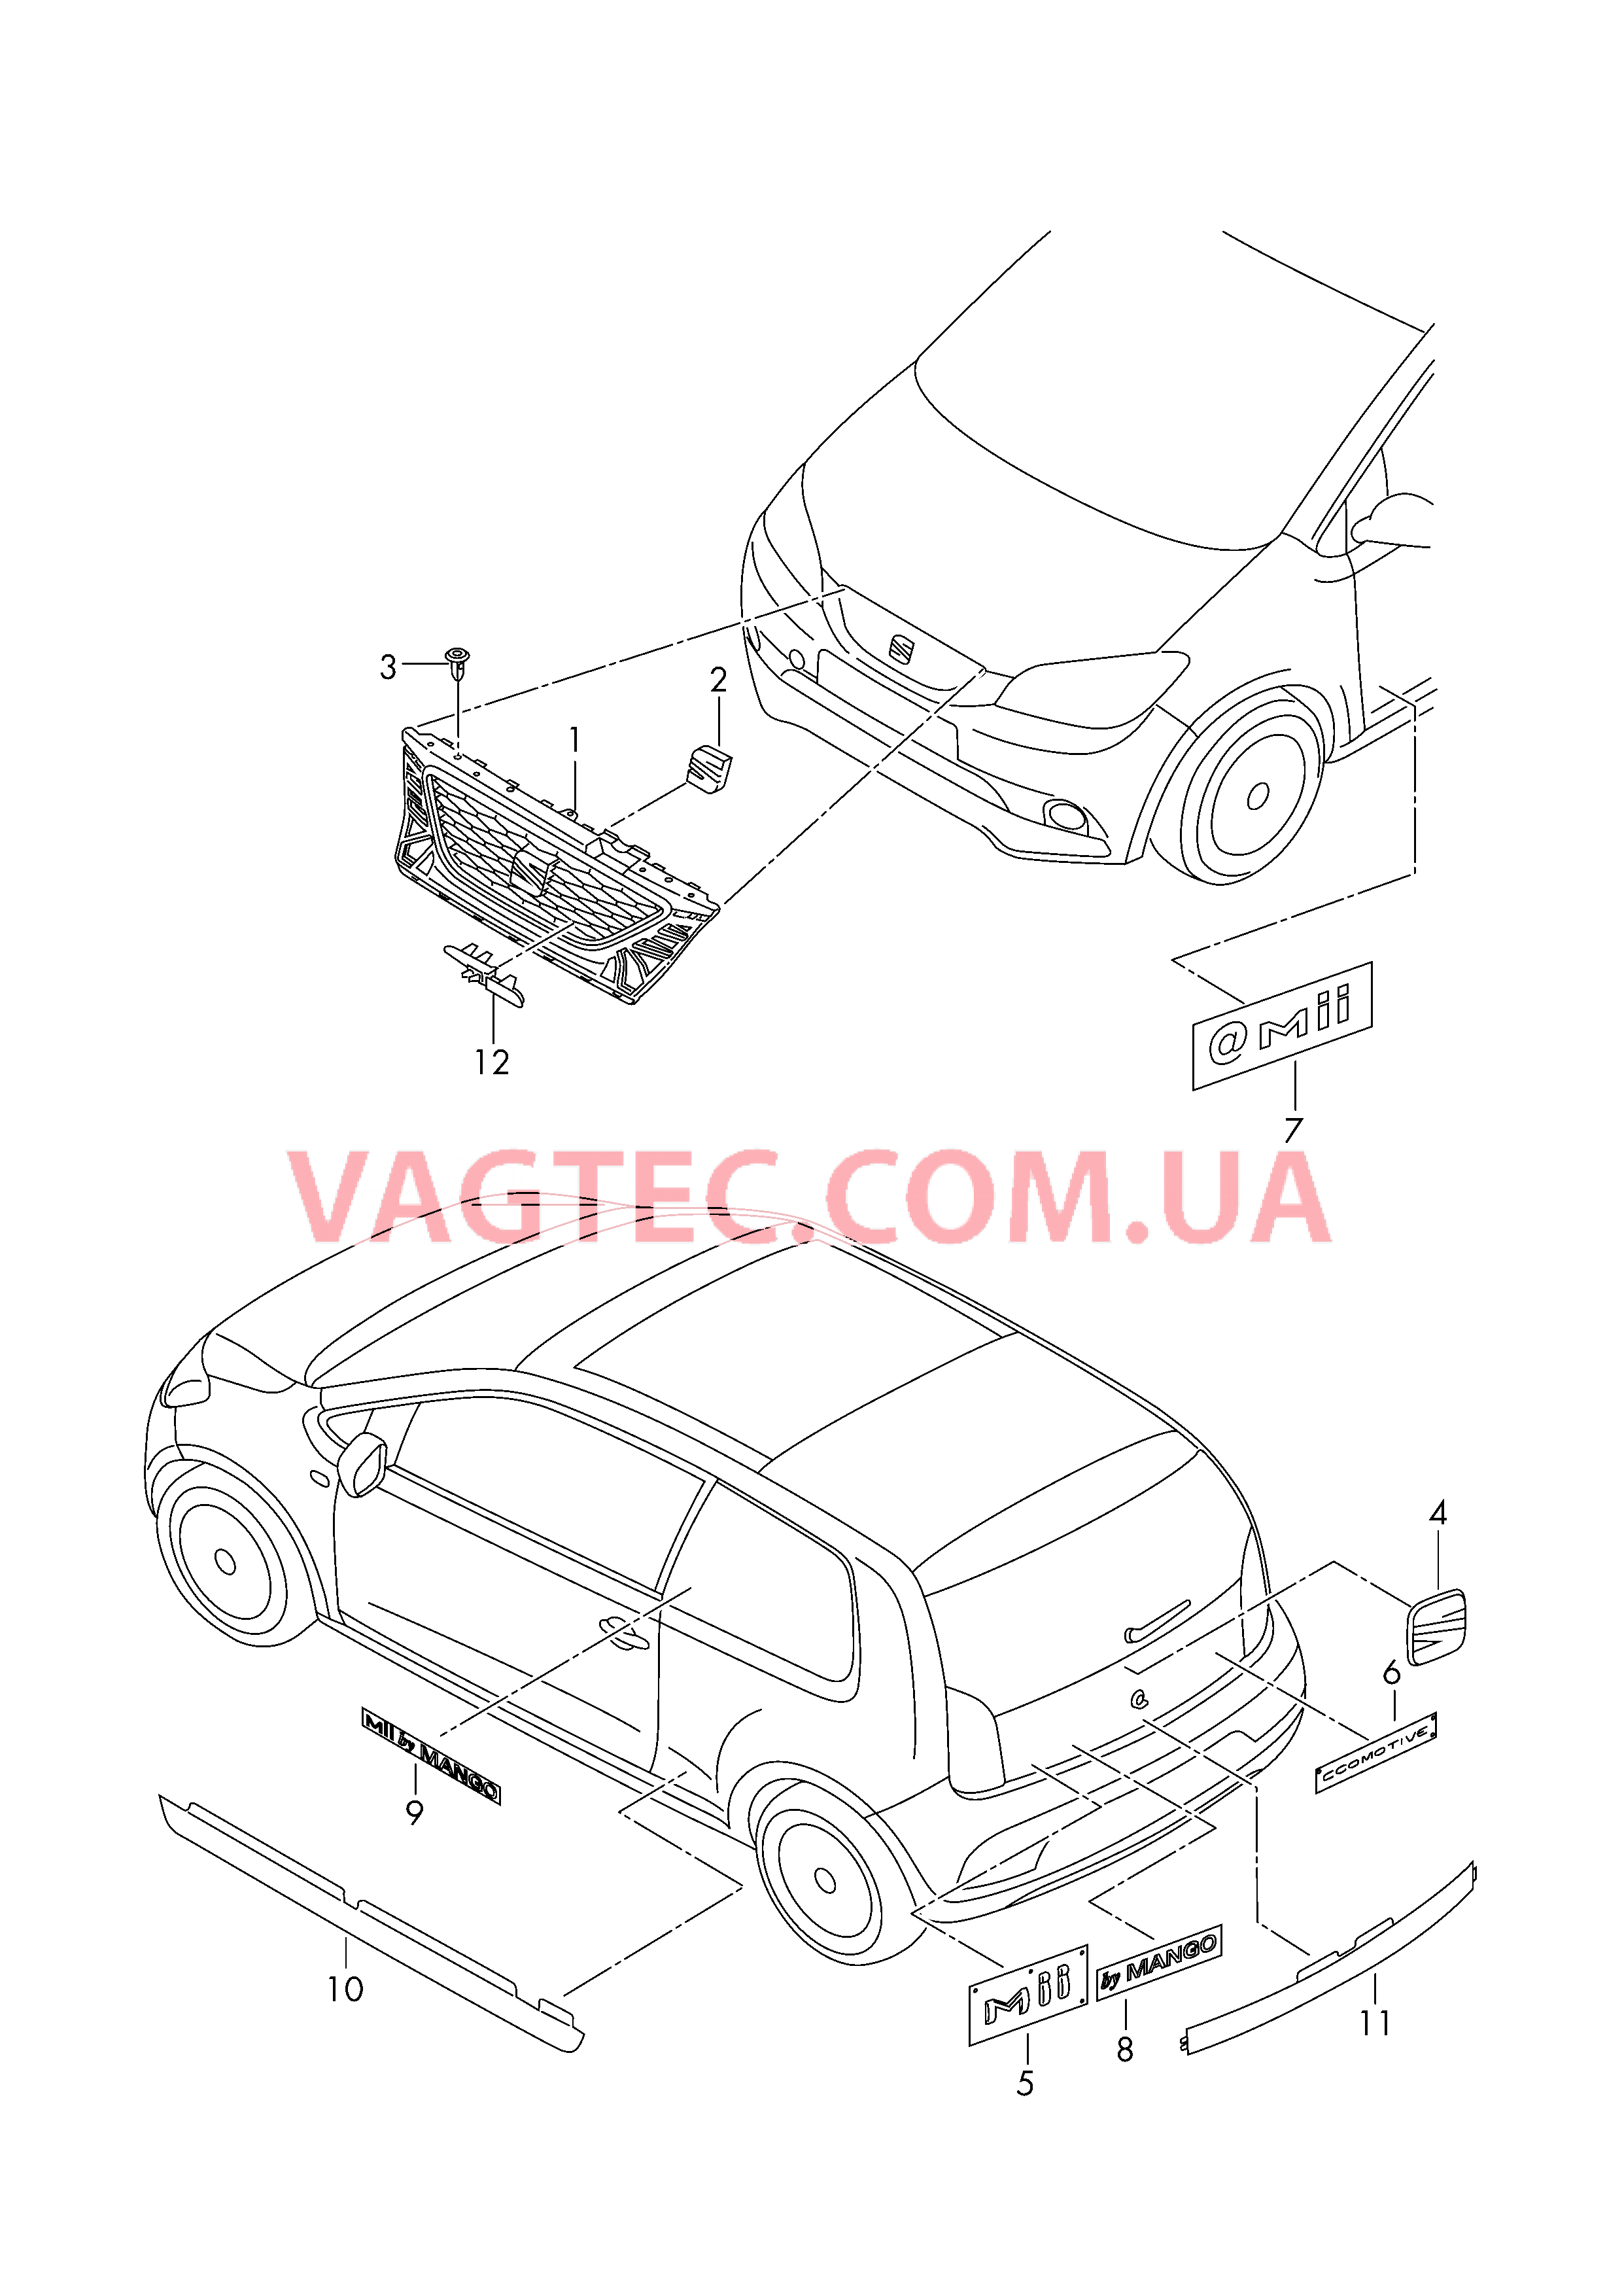 Решётка радиатора Надписи Брелок  для SEAT MI 2018